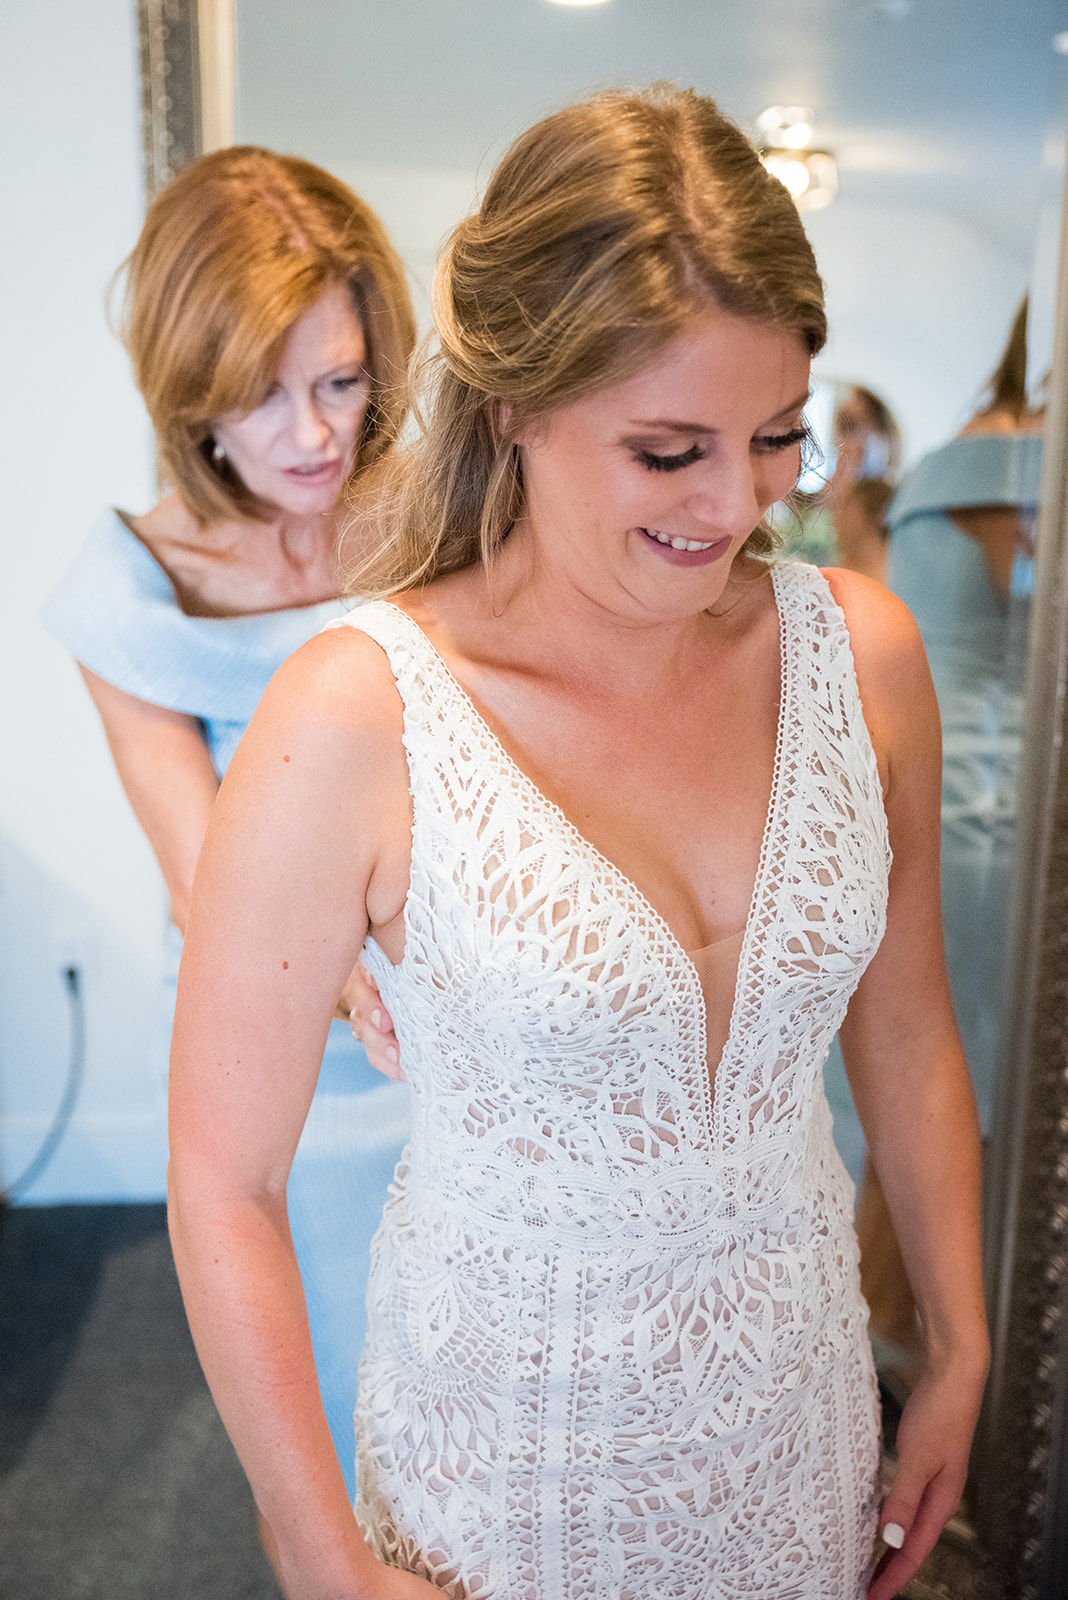 Bride's mother helps her button her wedding dress.